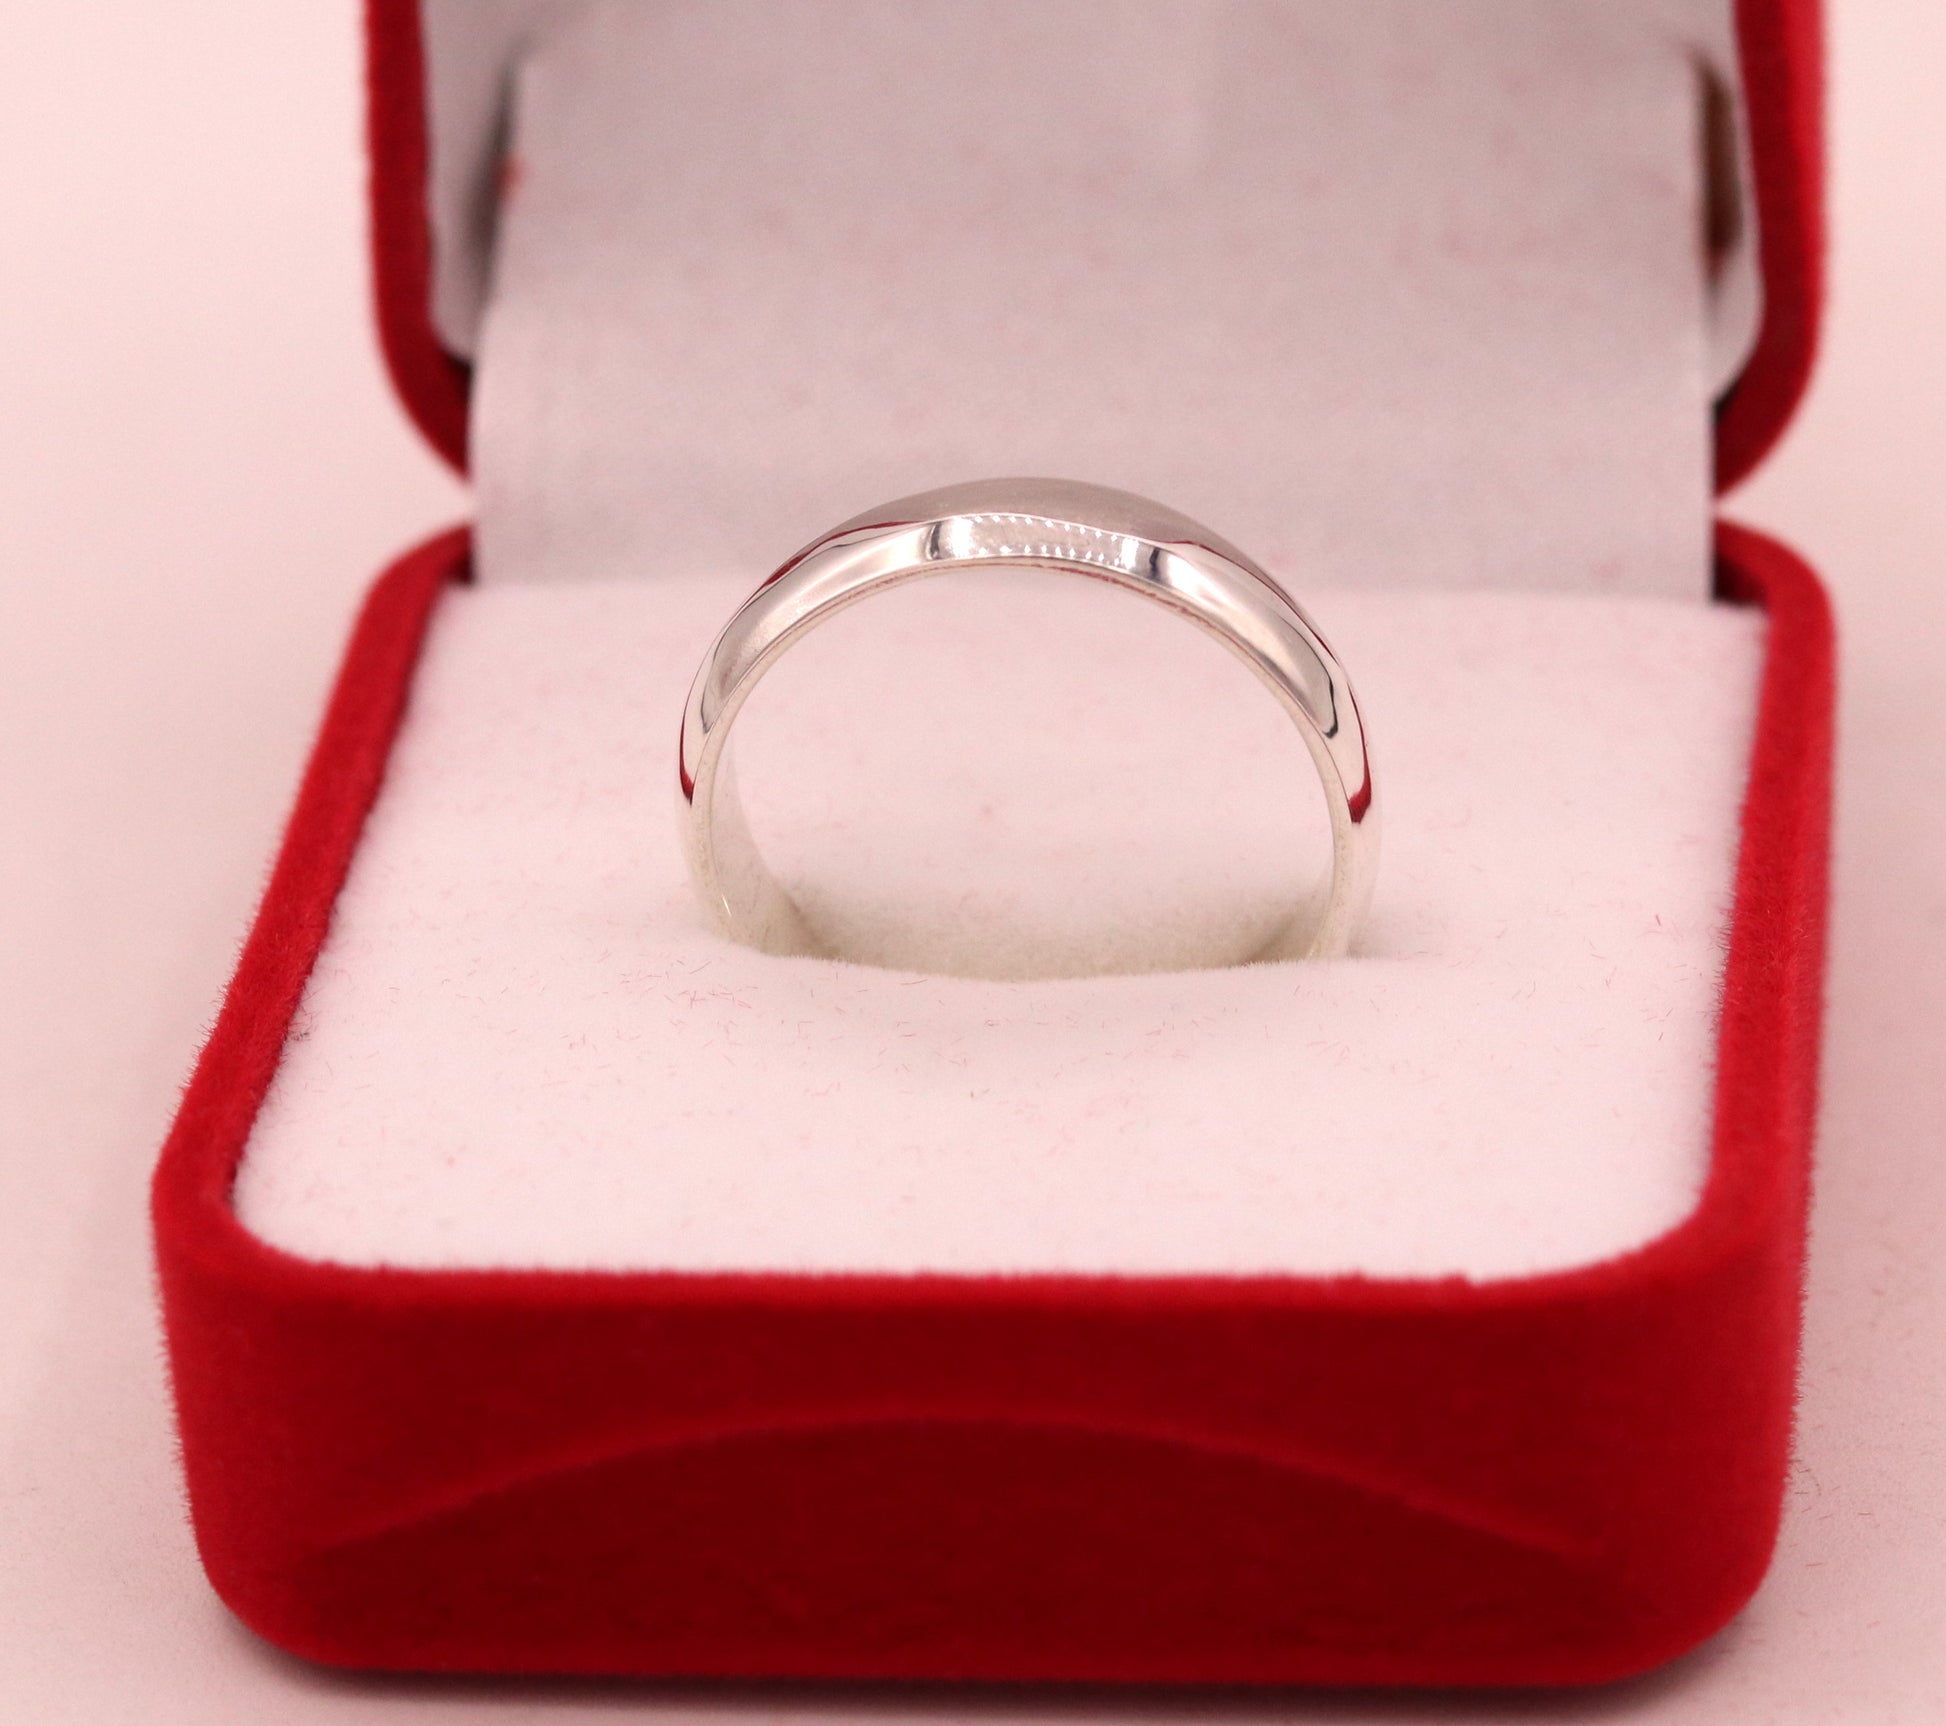 6mm 925silver Ring band fabulous unisex engagement wedding gifting custom size - TRIBAL ORNAMENTS